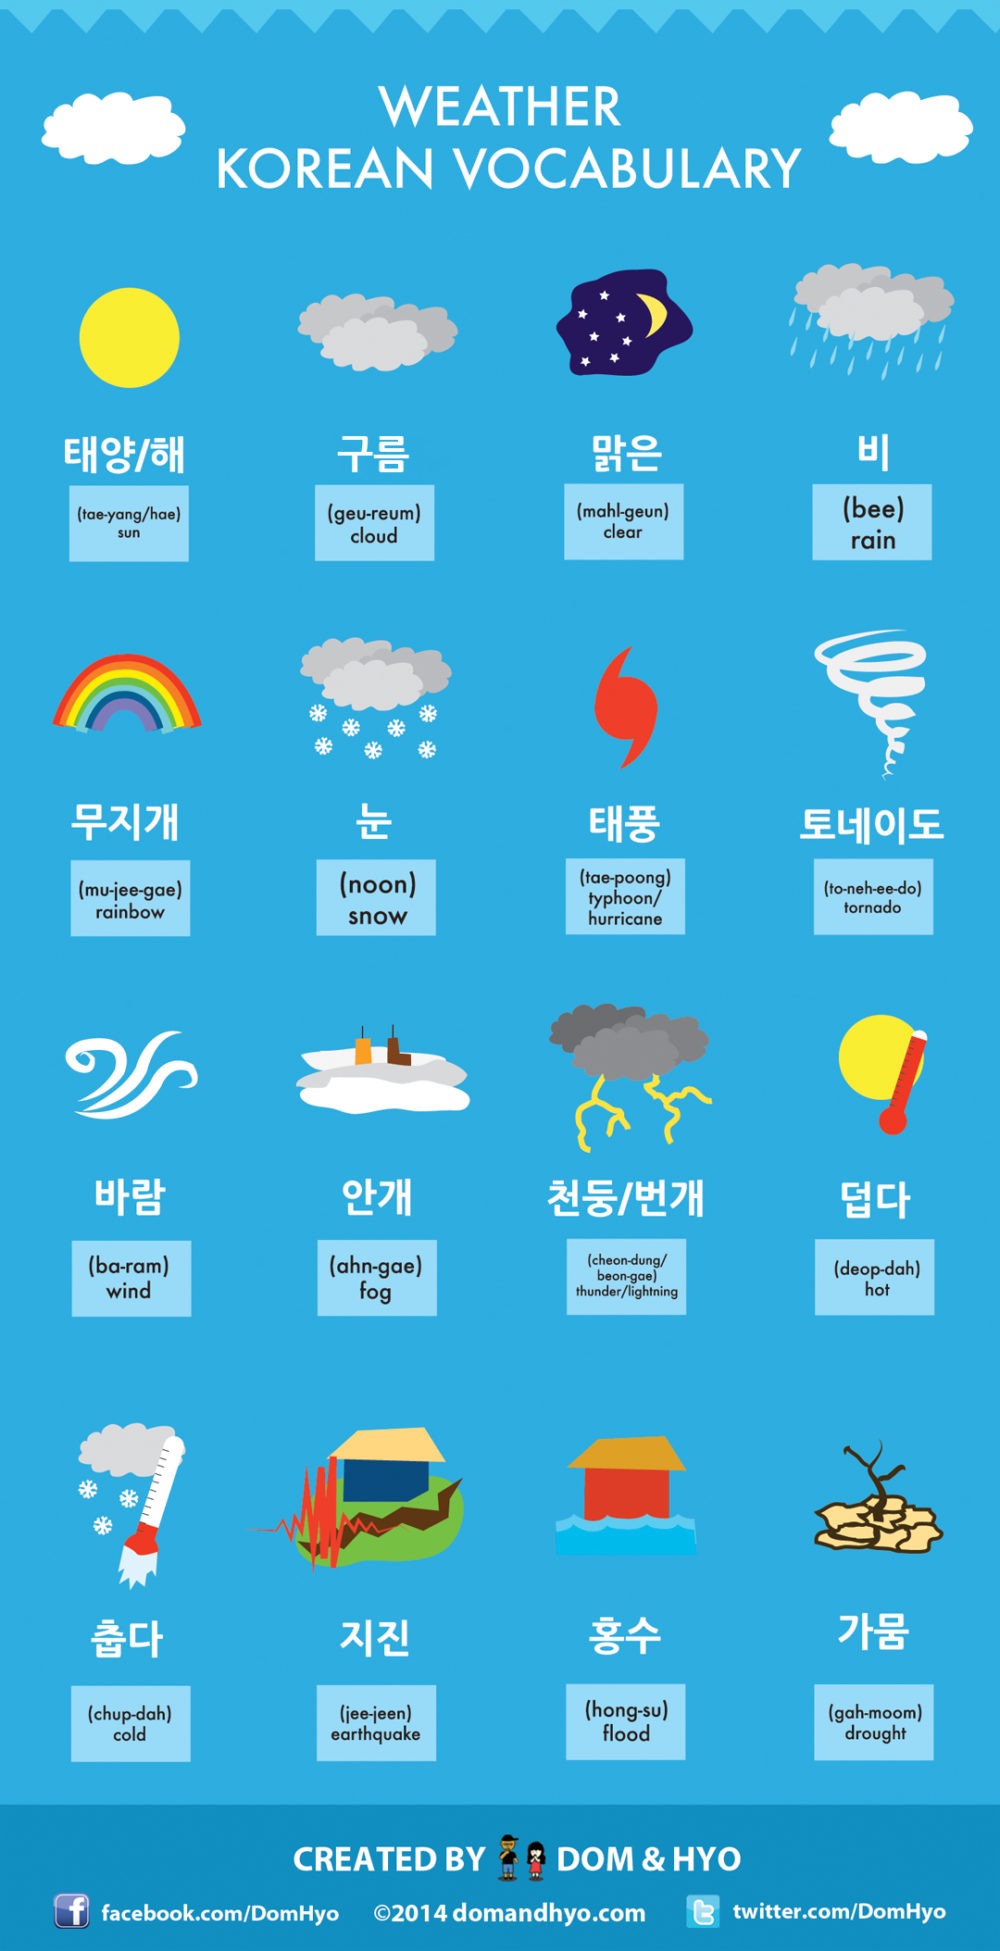 Korean Vocabulary Weather Learn Basic Korean Vocabulary & Phrases